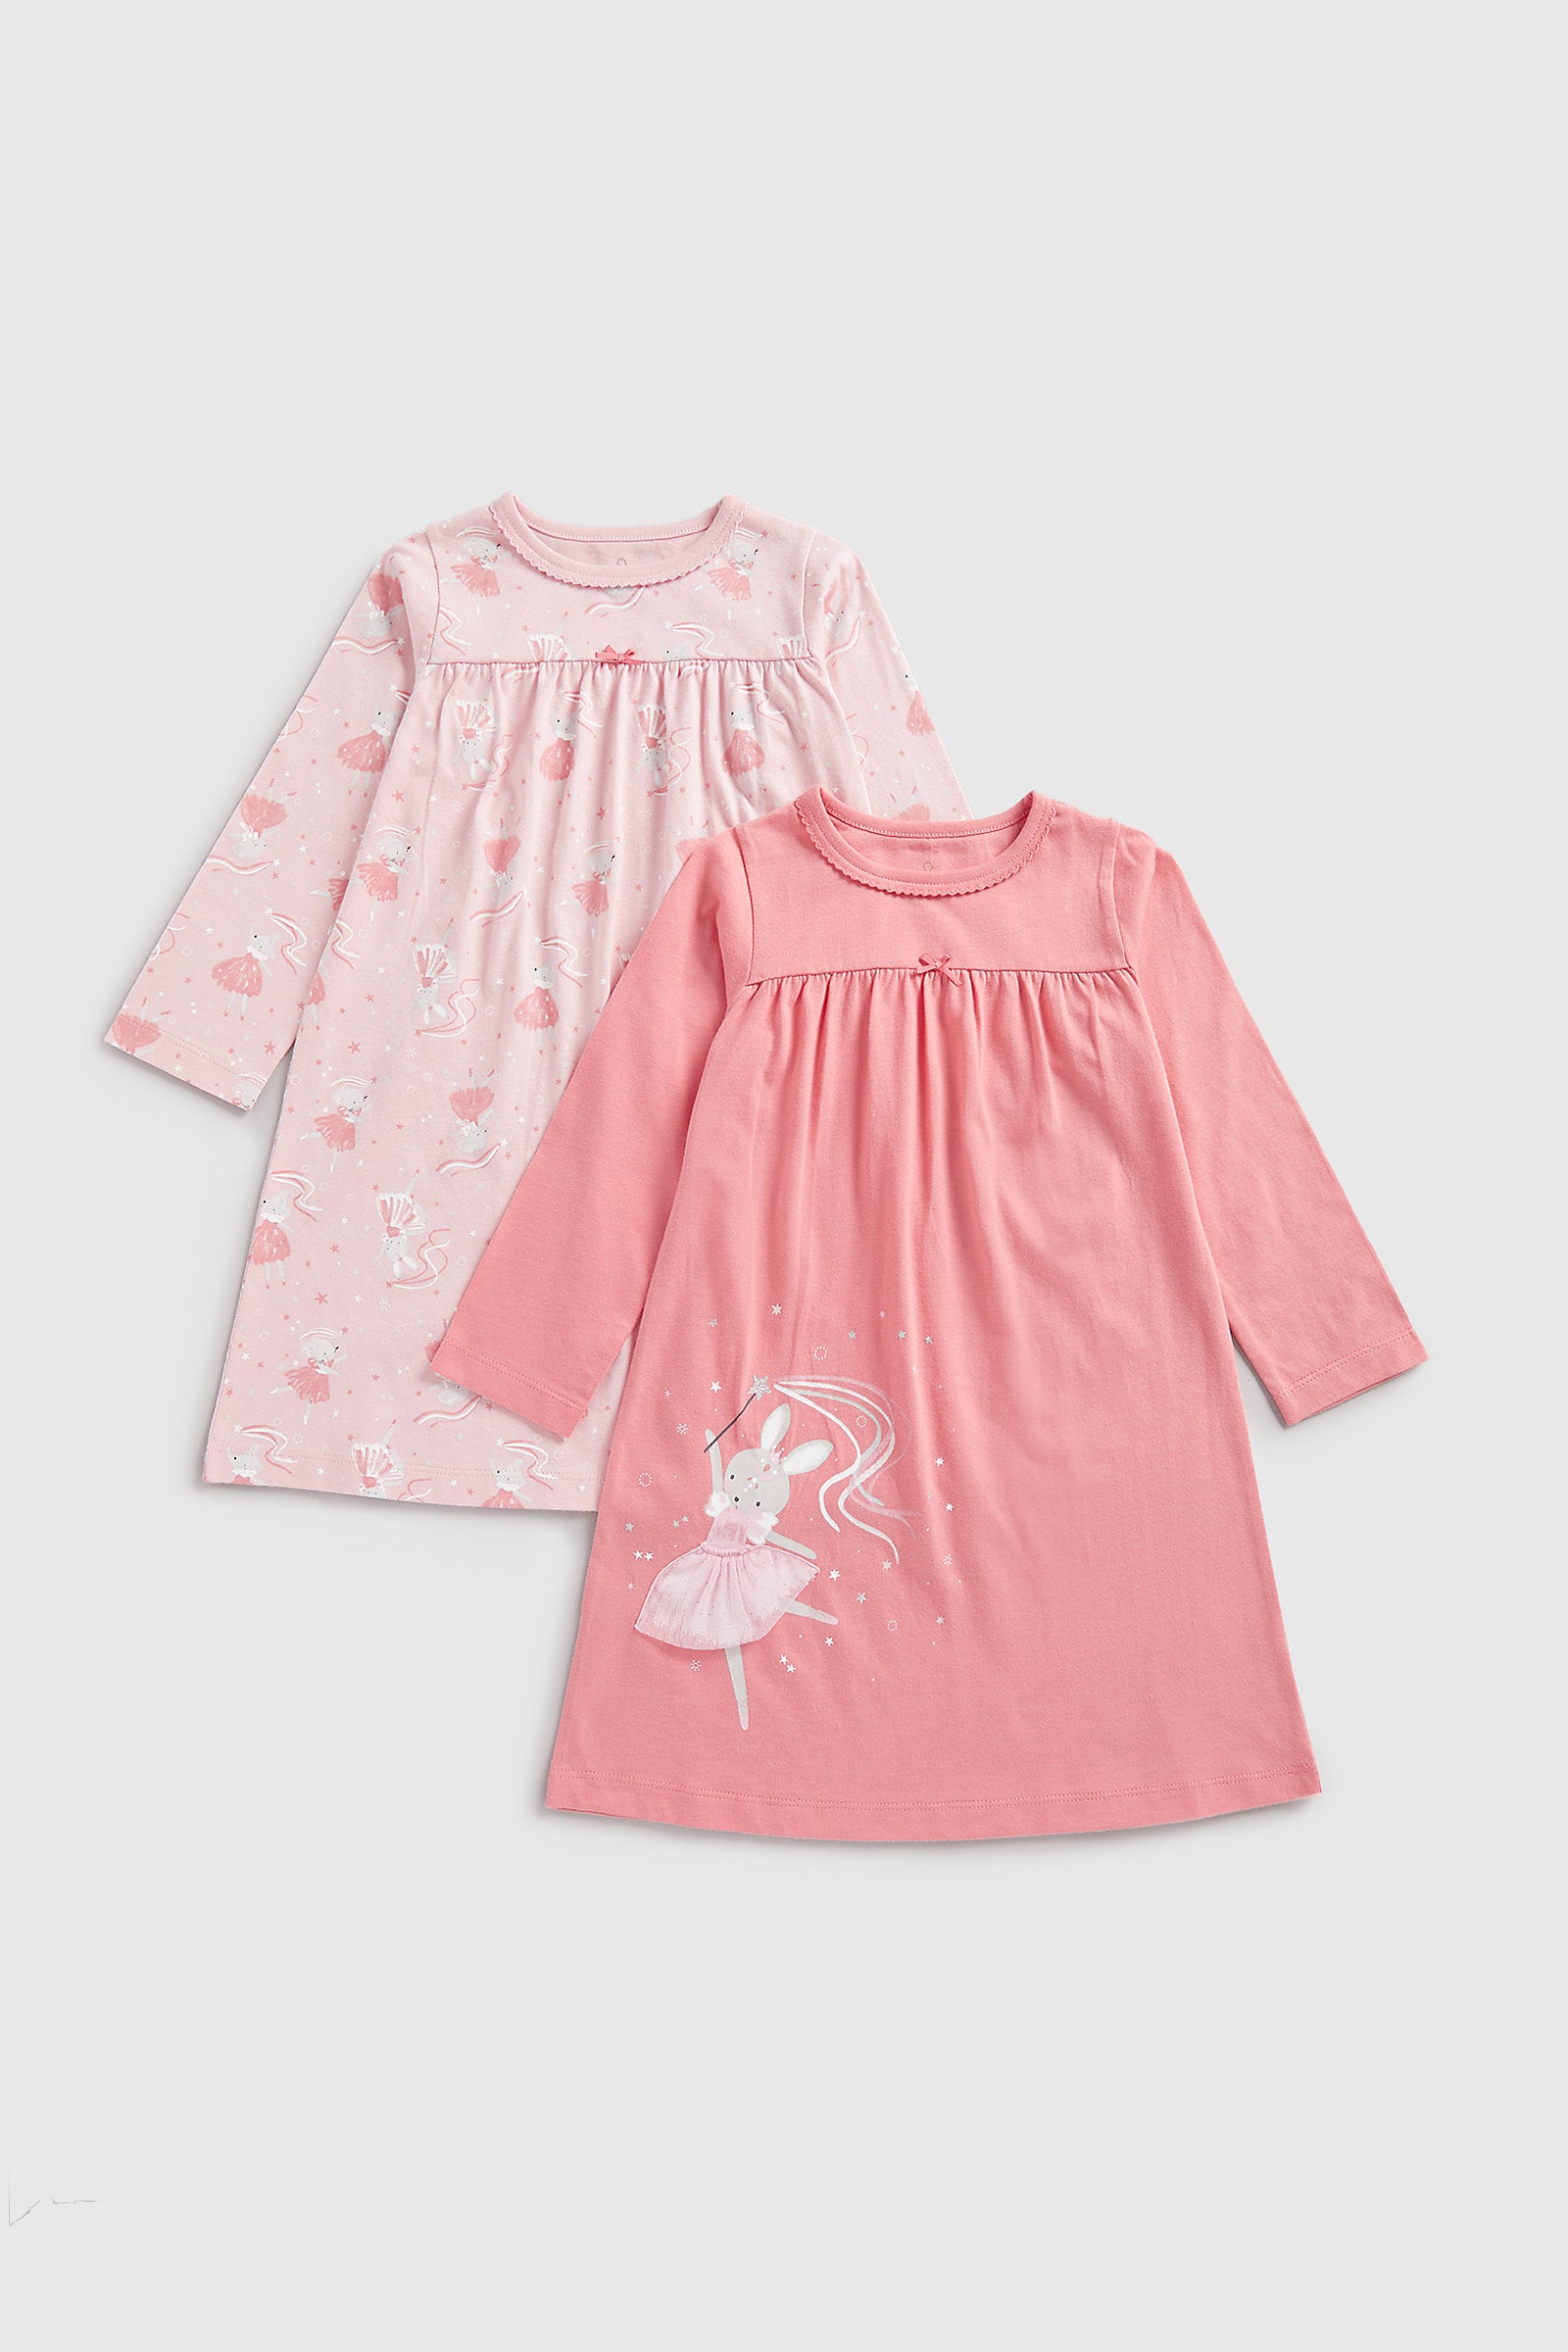 Mothercare Bunny Ballerina Nightdresses - 2 Pack